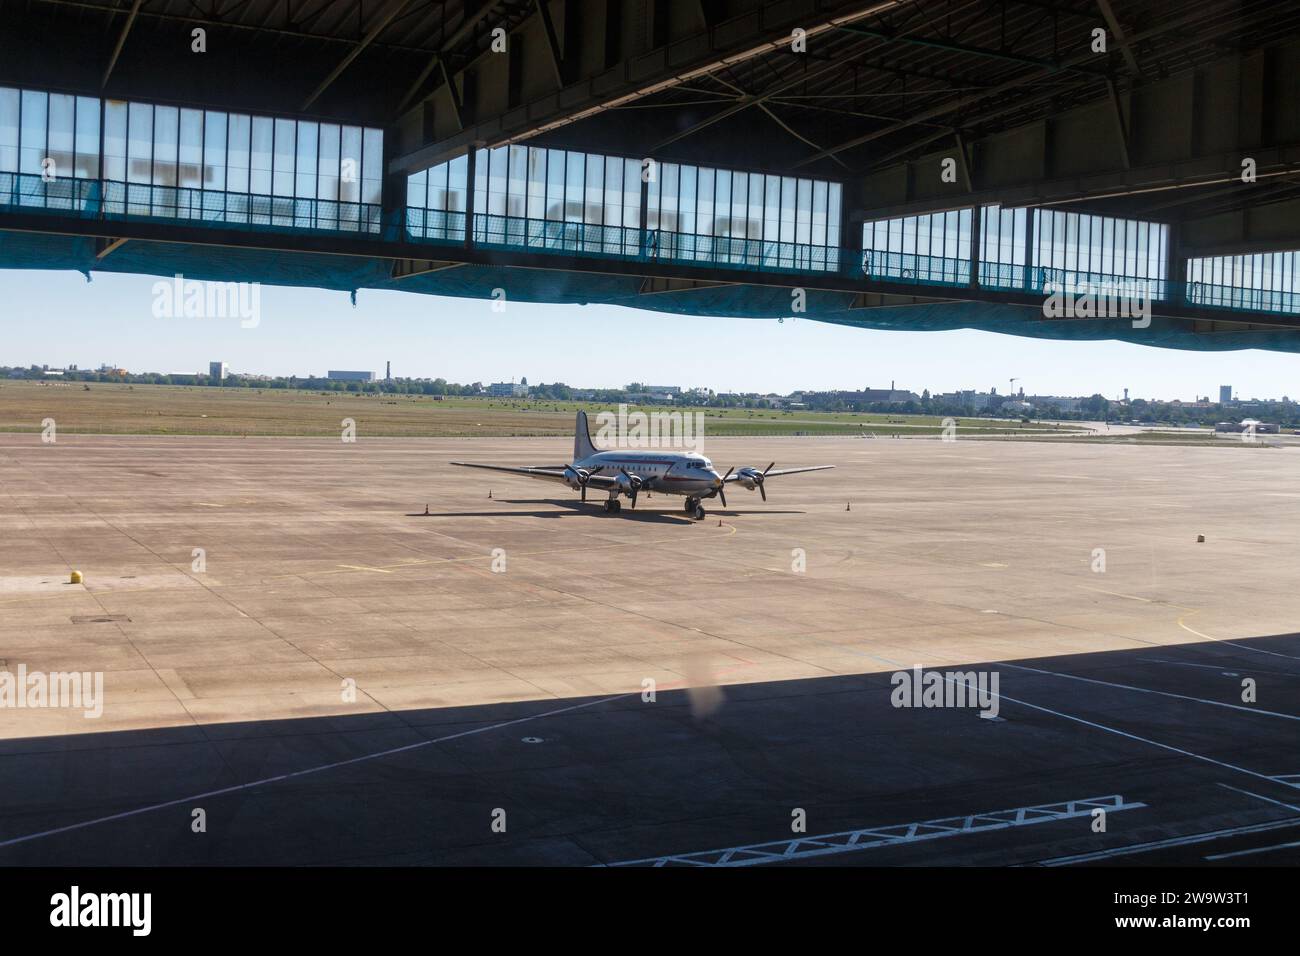 Un rosinenbomber all'aeroporto di Tempelhof Foto Stock